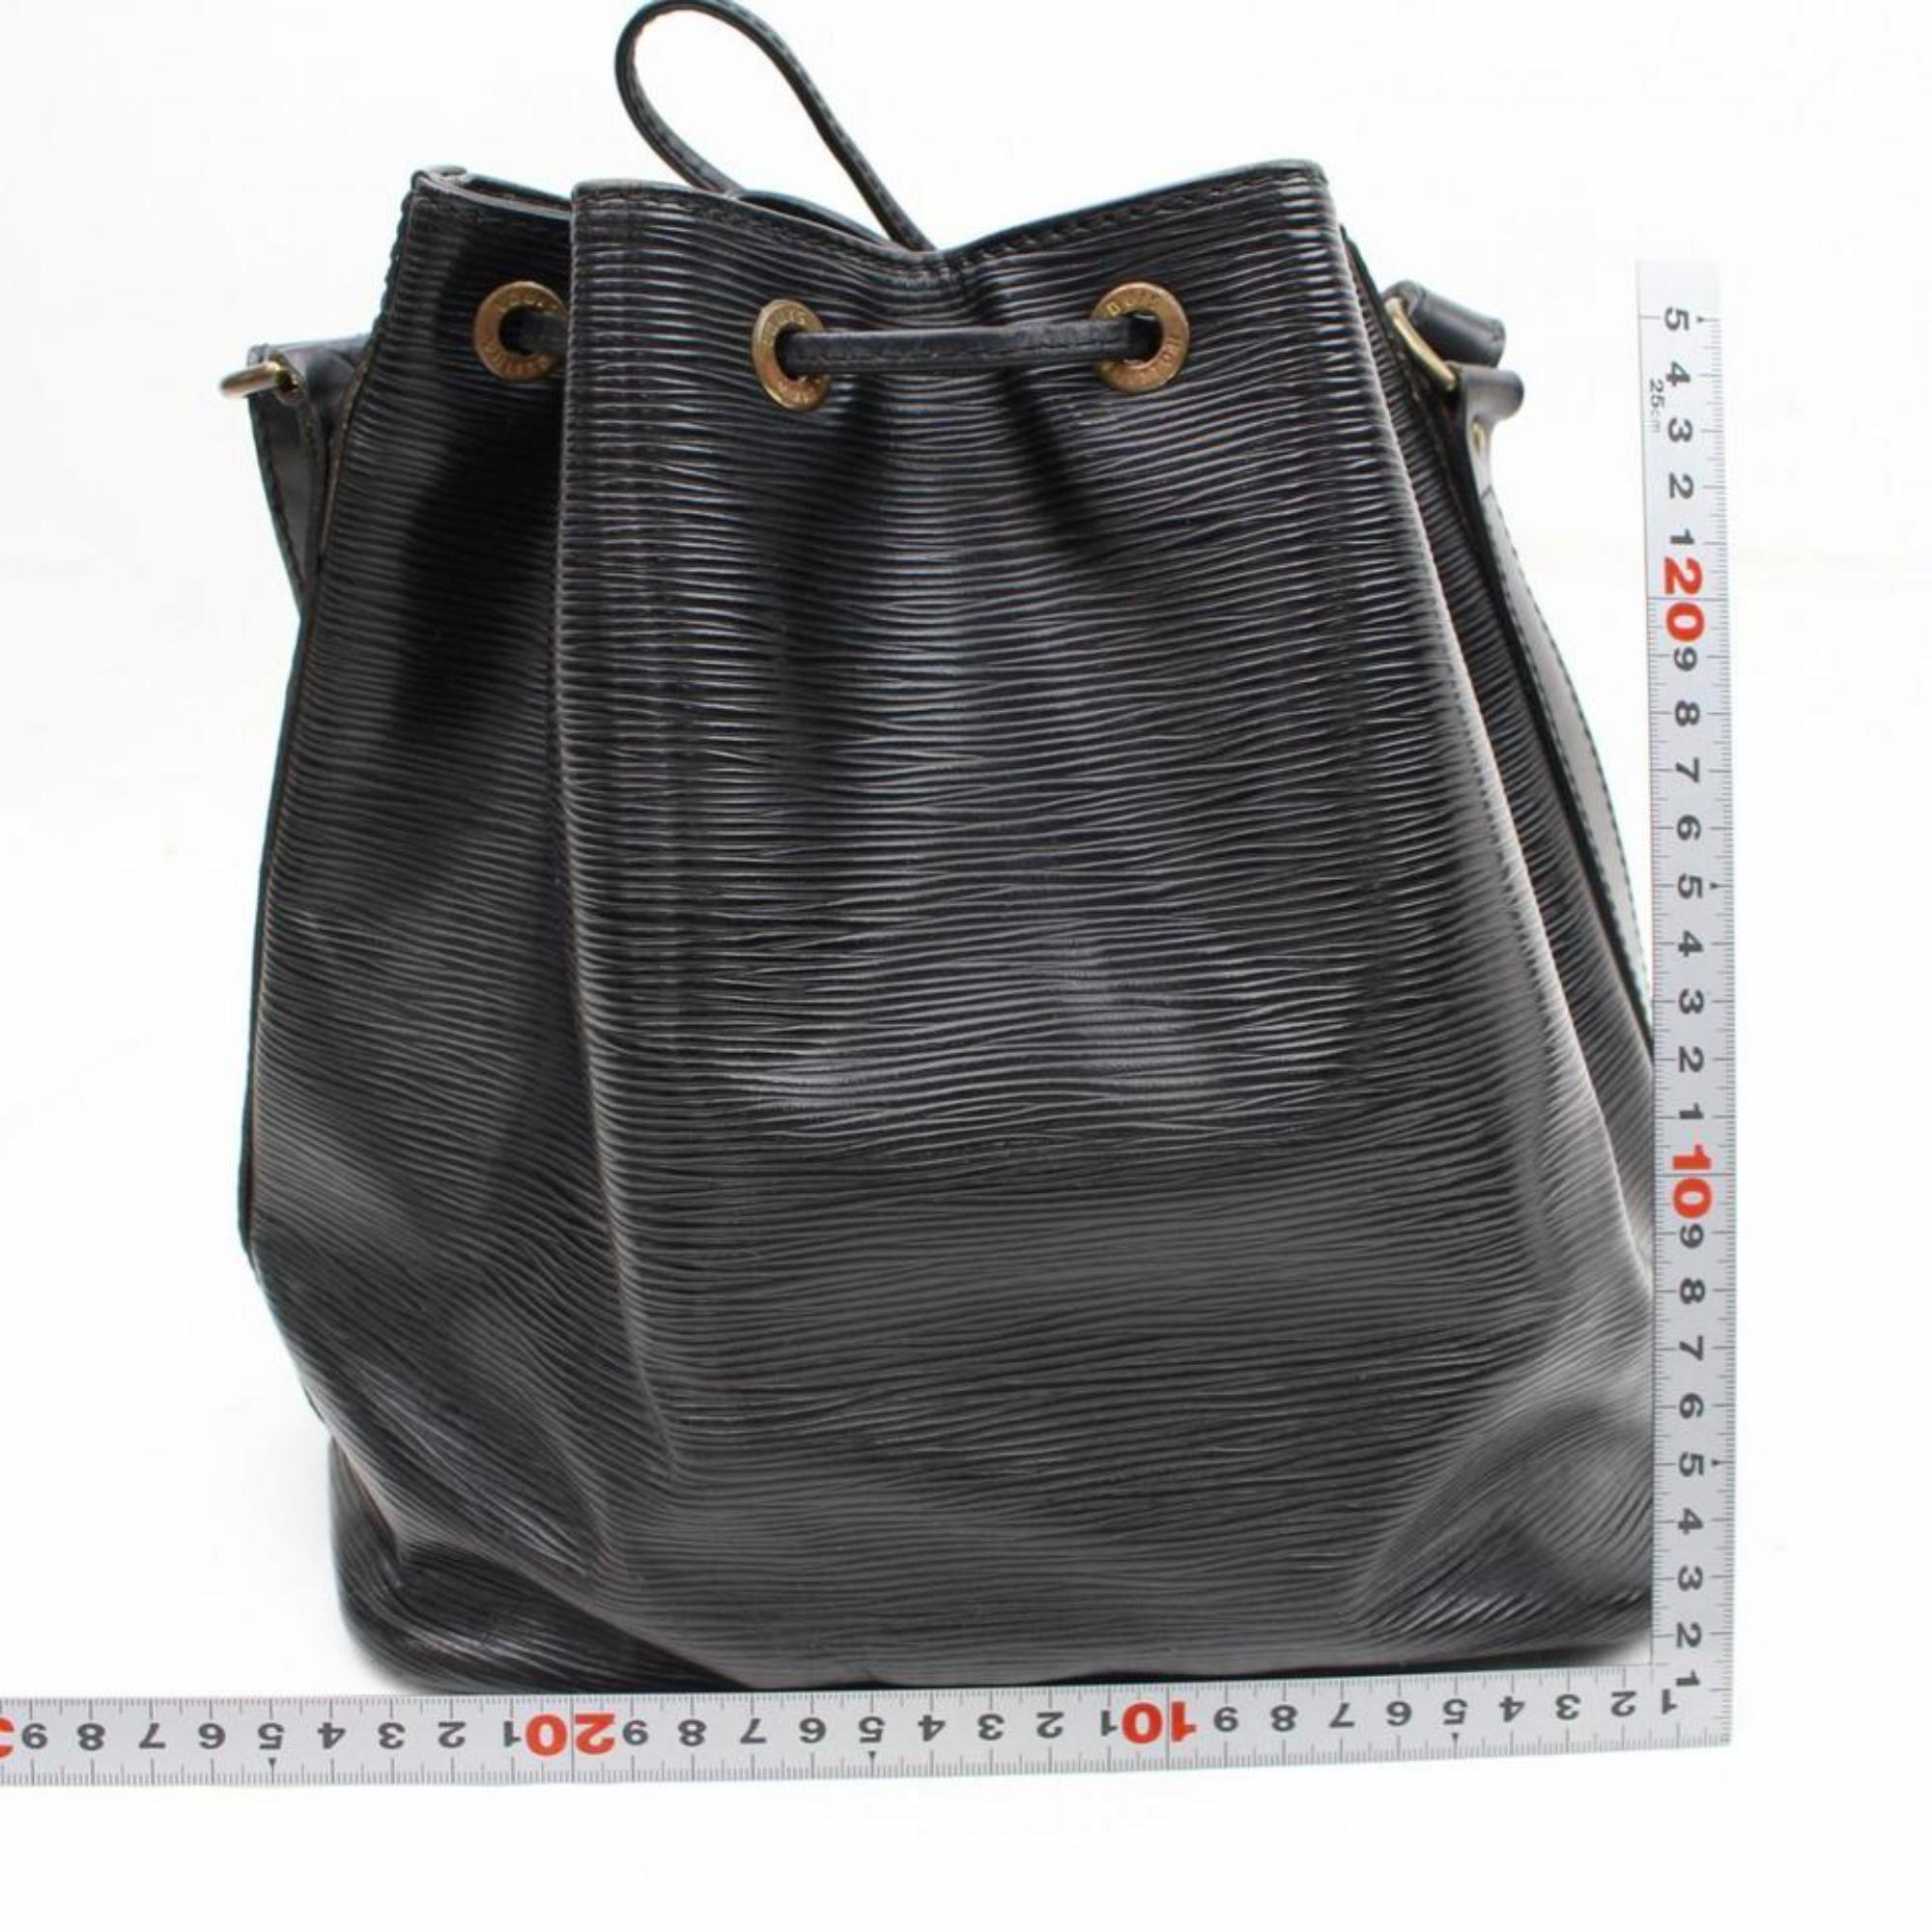 Louis Vuitton Petit Noe 866536 Black Leather Hobo Bag For Sale 2